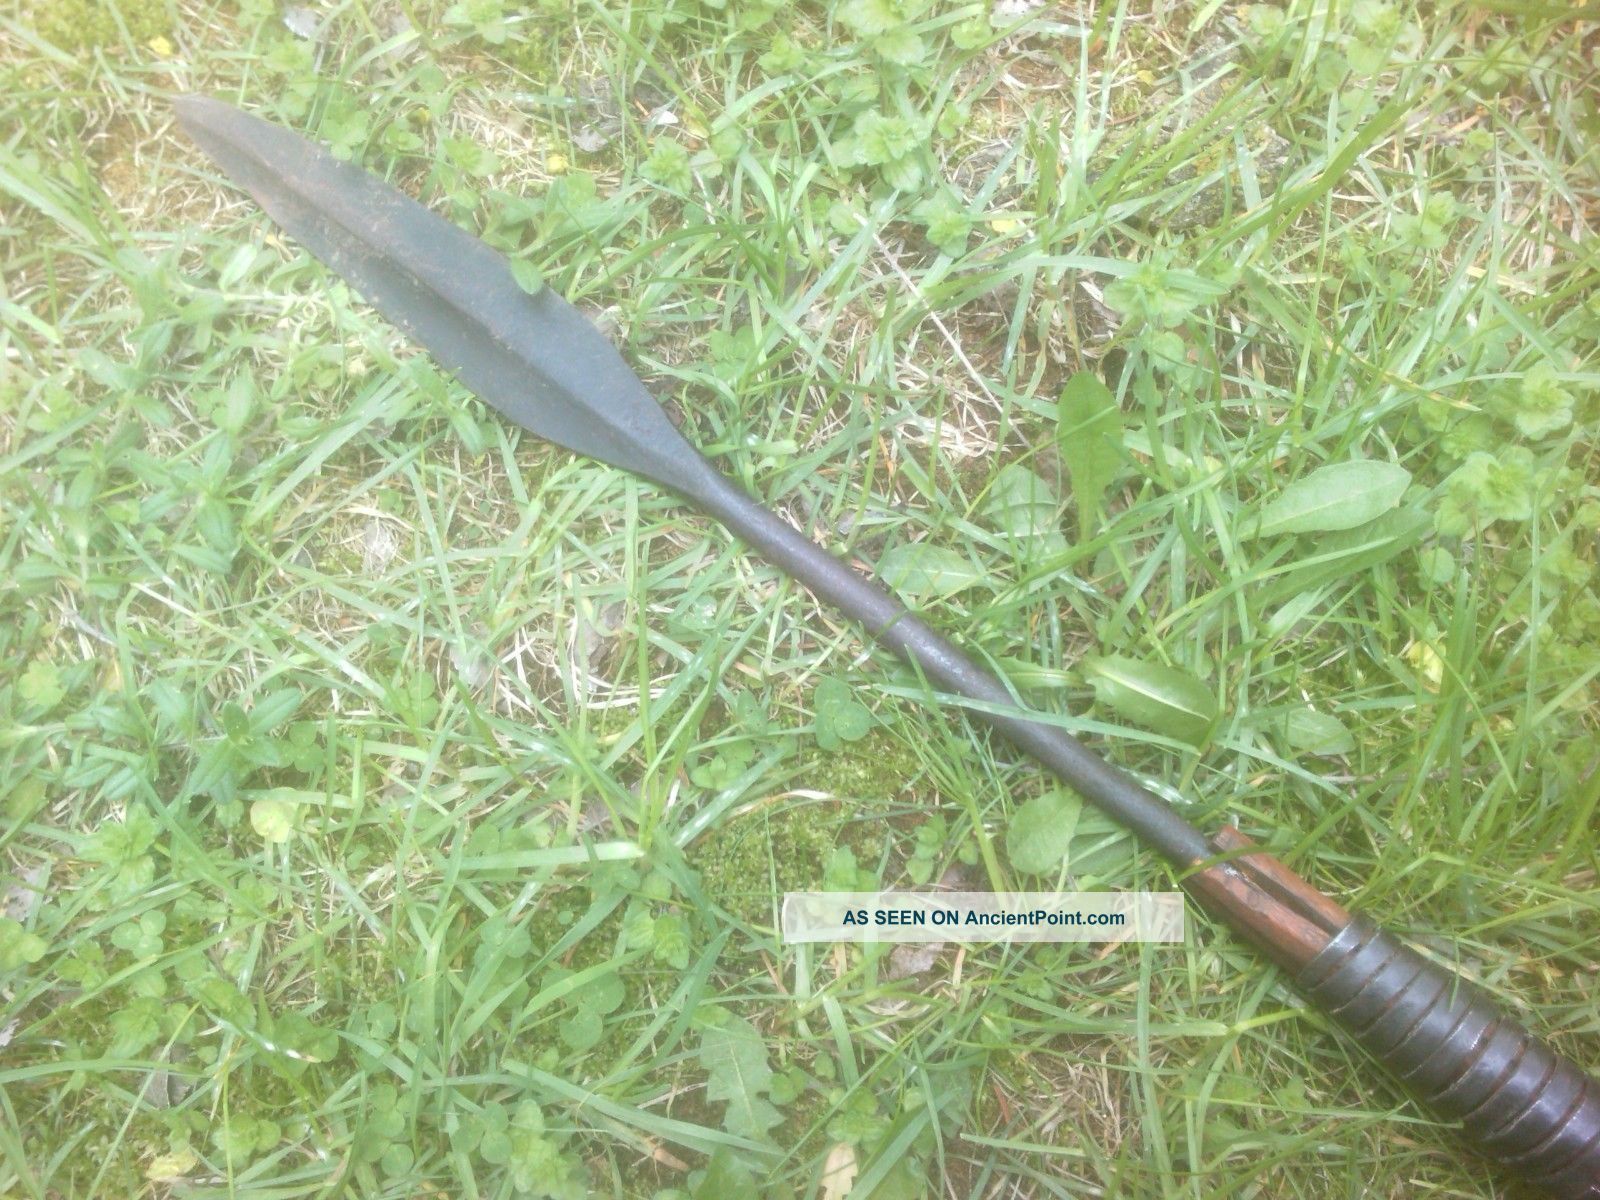 Ngoni Congo Spear Hunting 42 